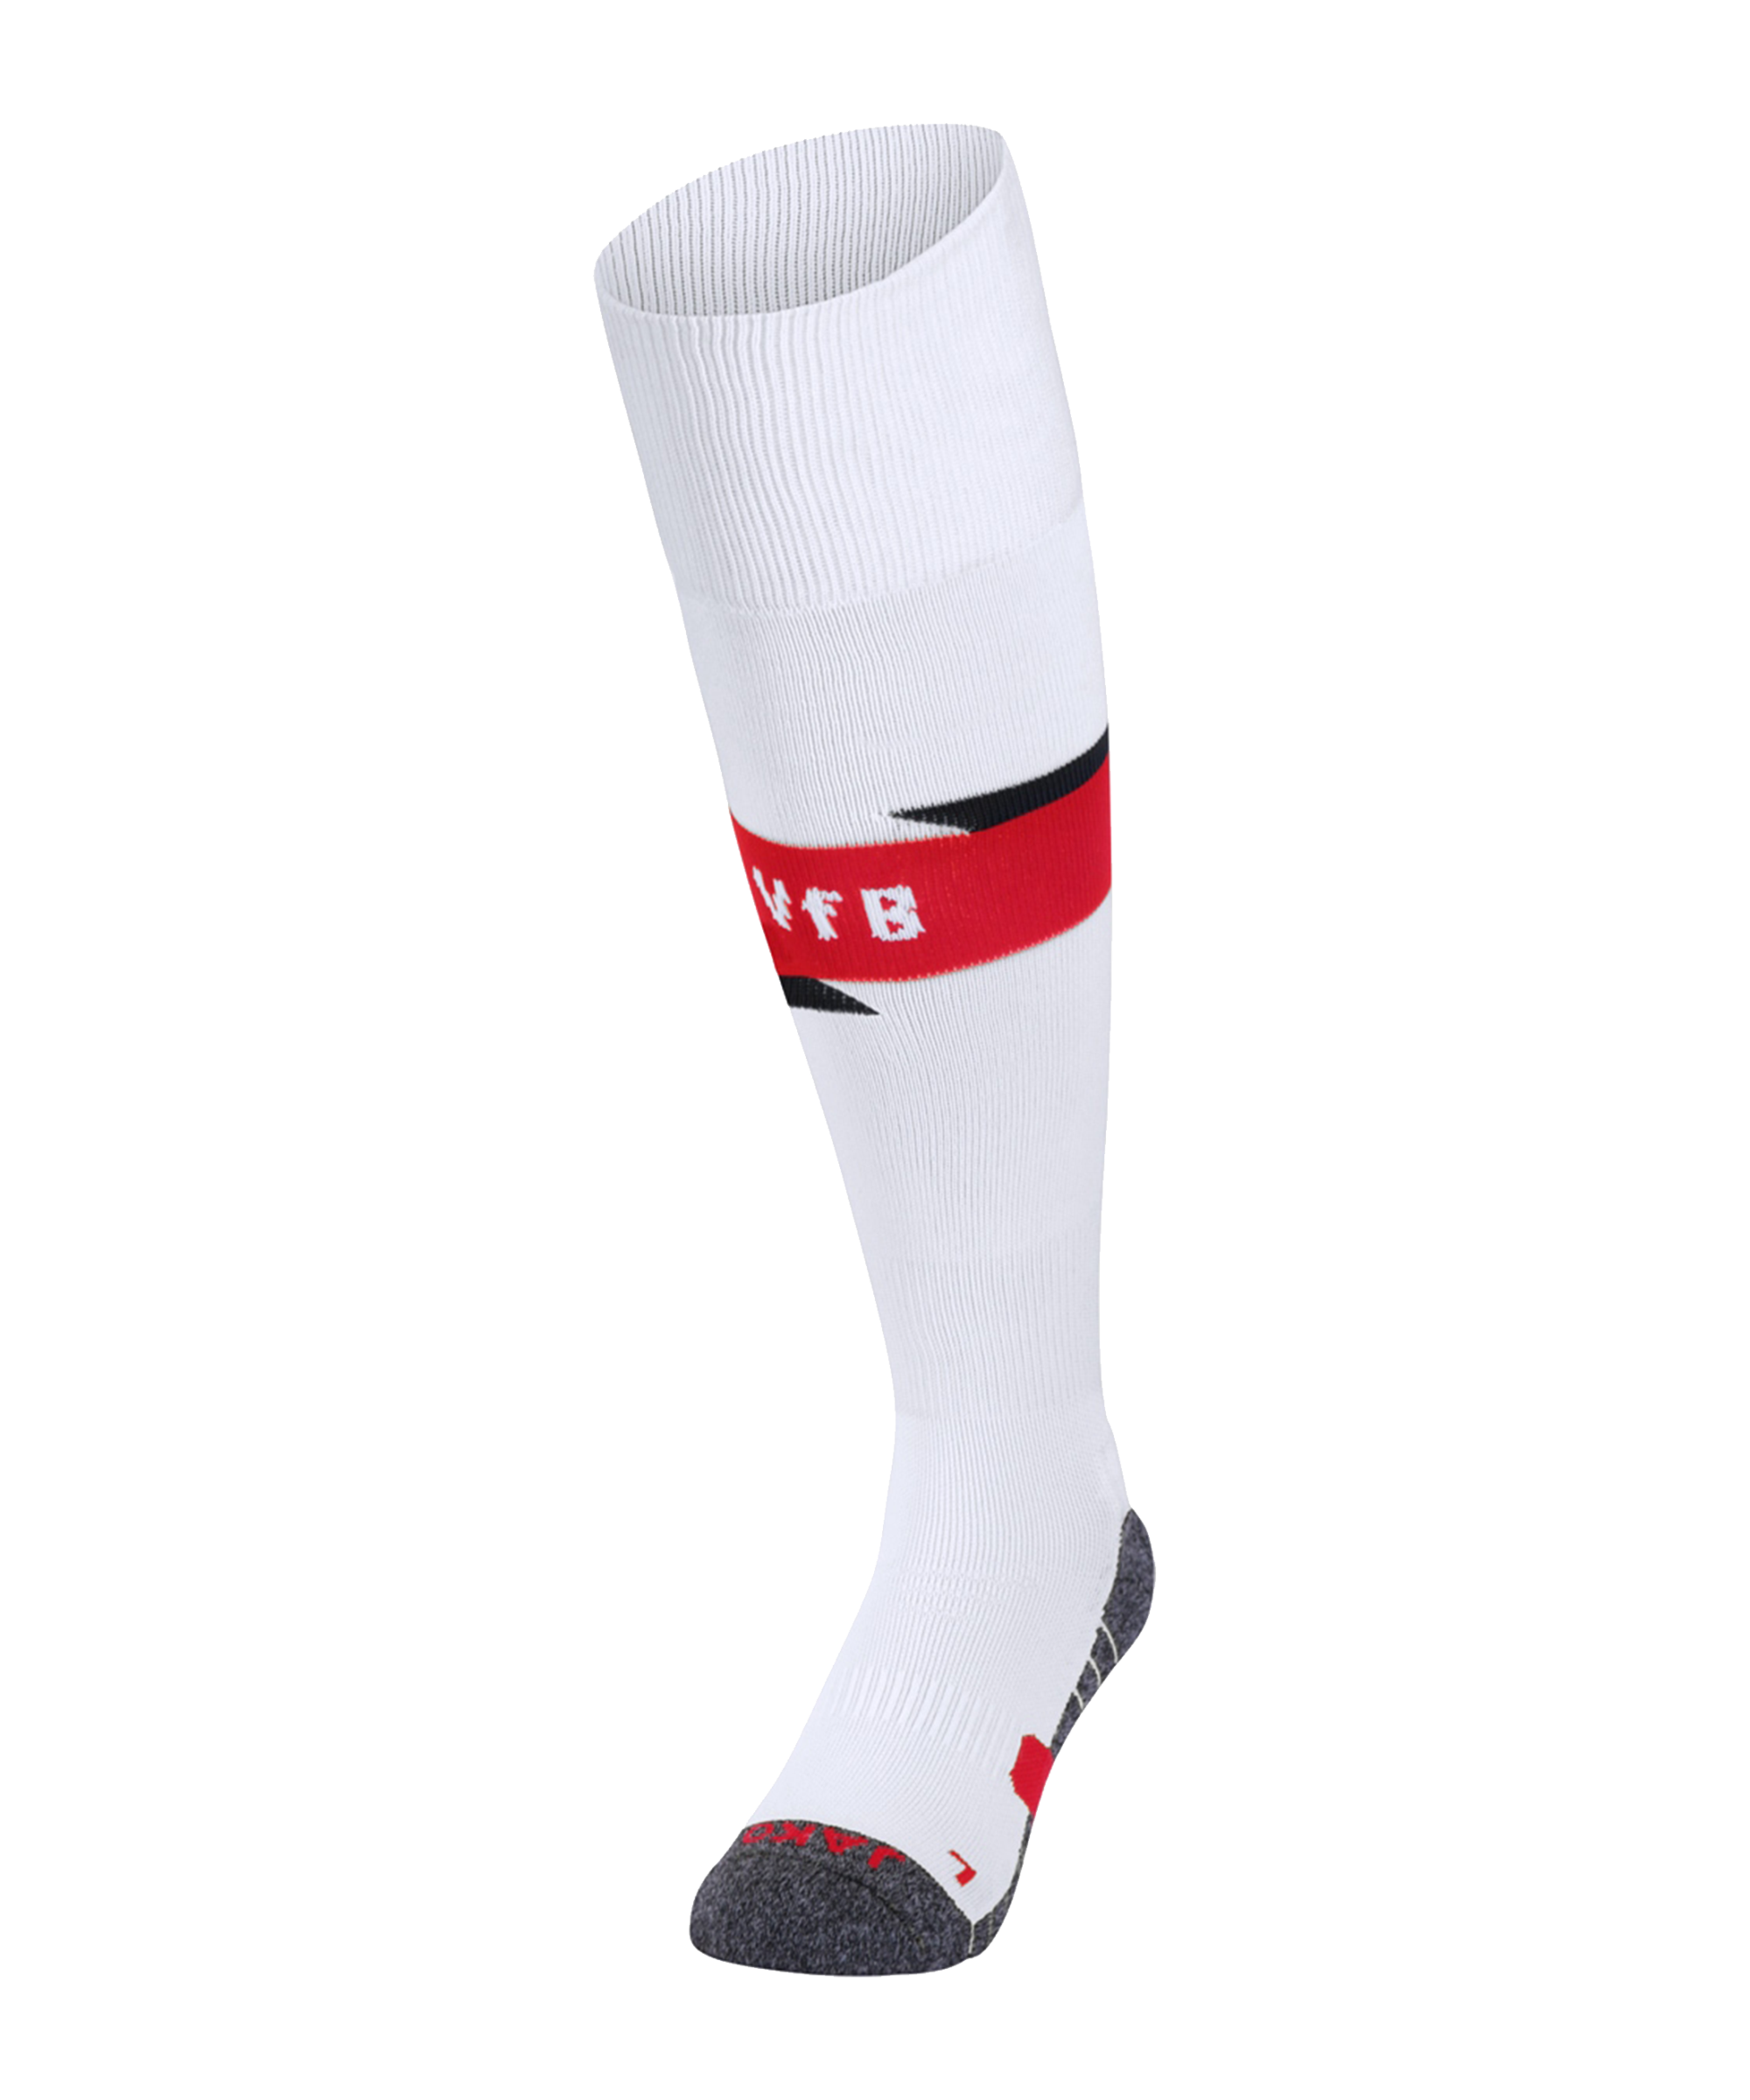 Socks Shin Pads Boots Gloves White Sports Sock Tape 